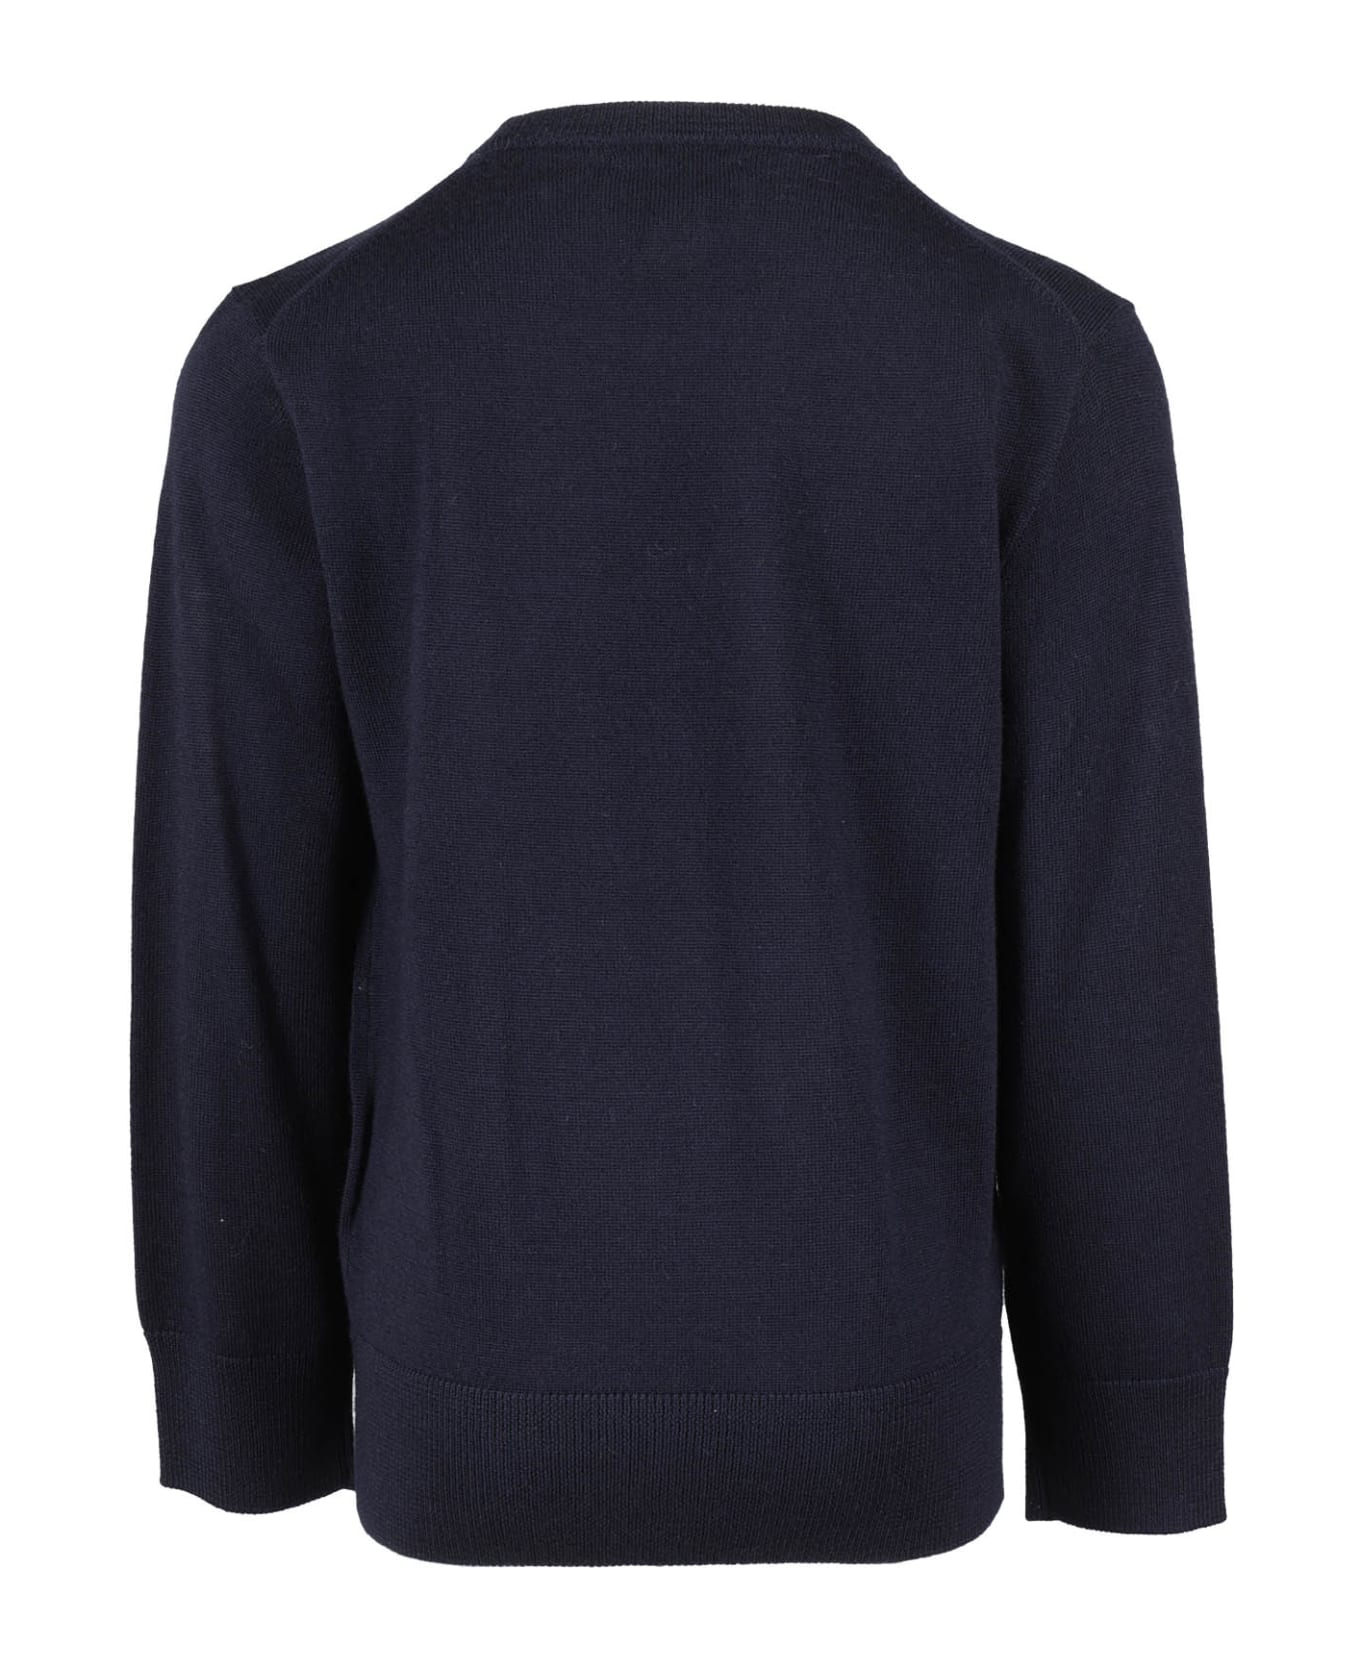 Polo Ralph Lauren Sweater - Navy